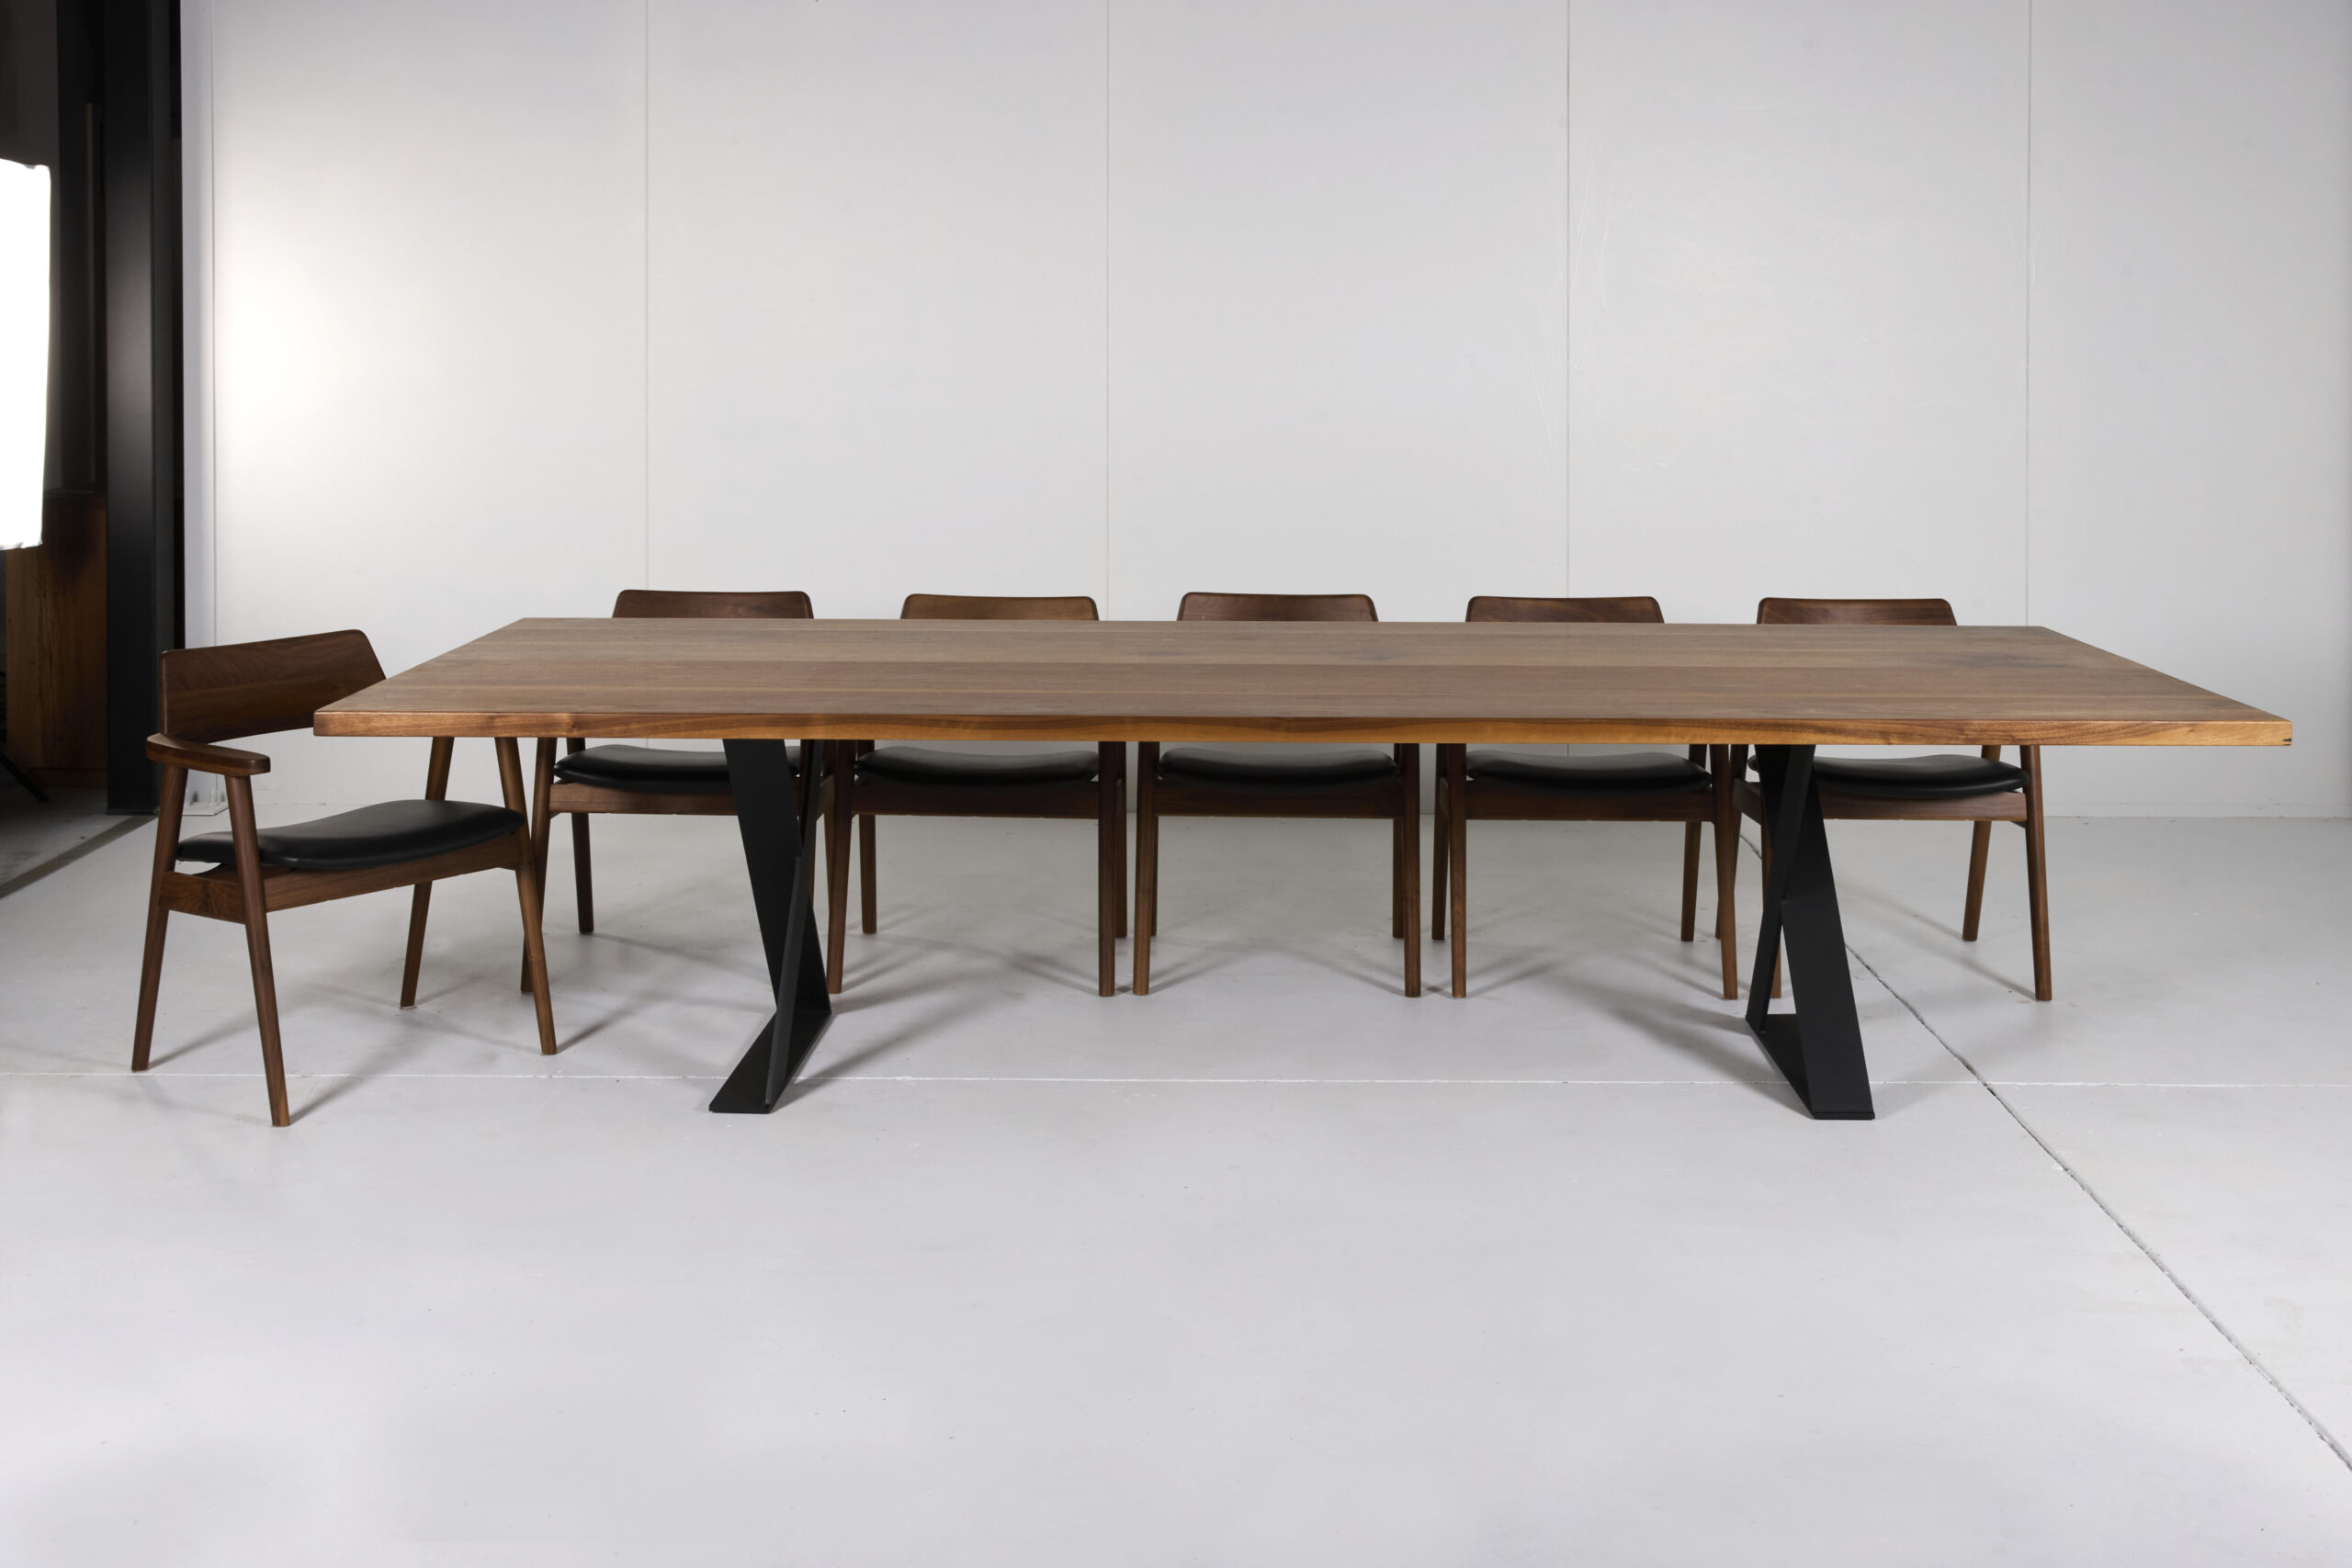 Image of Ballarat Dining Table by Arranmore Furniture, showcasing its sleek X Leg design in a modern dining setting.